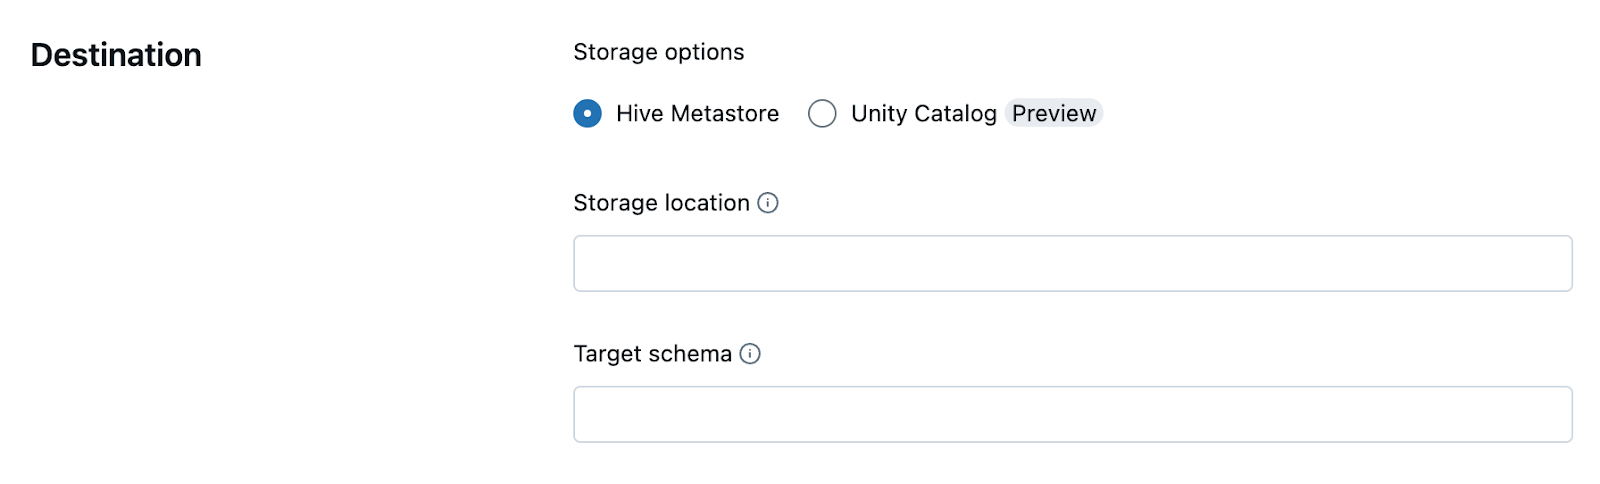 Storage options and storage destinations - Databricks Delta Live Table